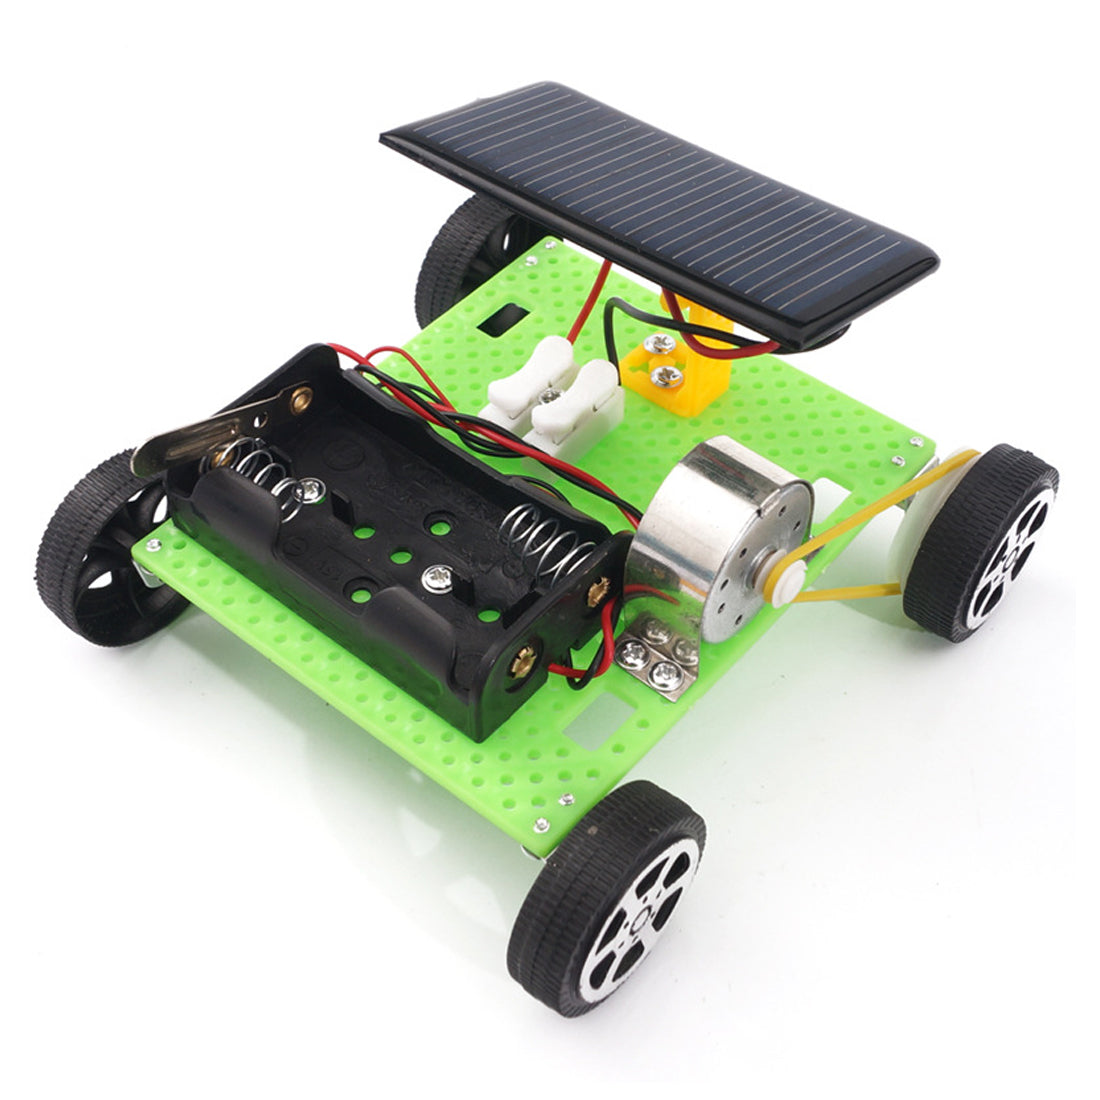 diy-plastic-solar-hybrid-electric-vehicle-stem-educational-learning-kit.jpg